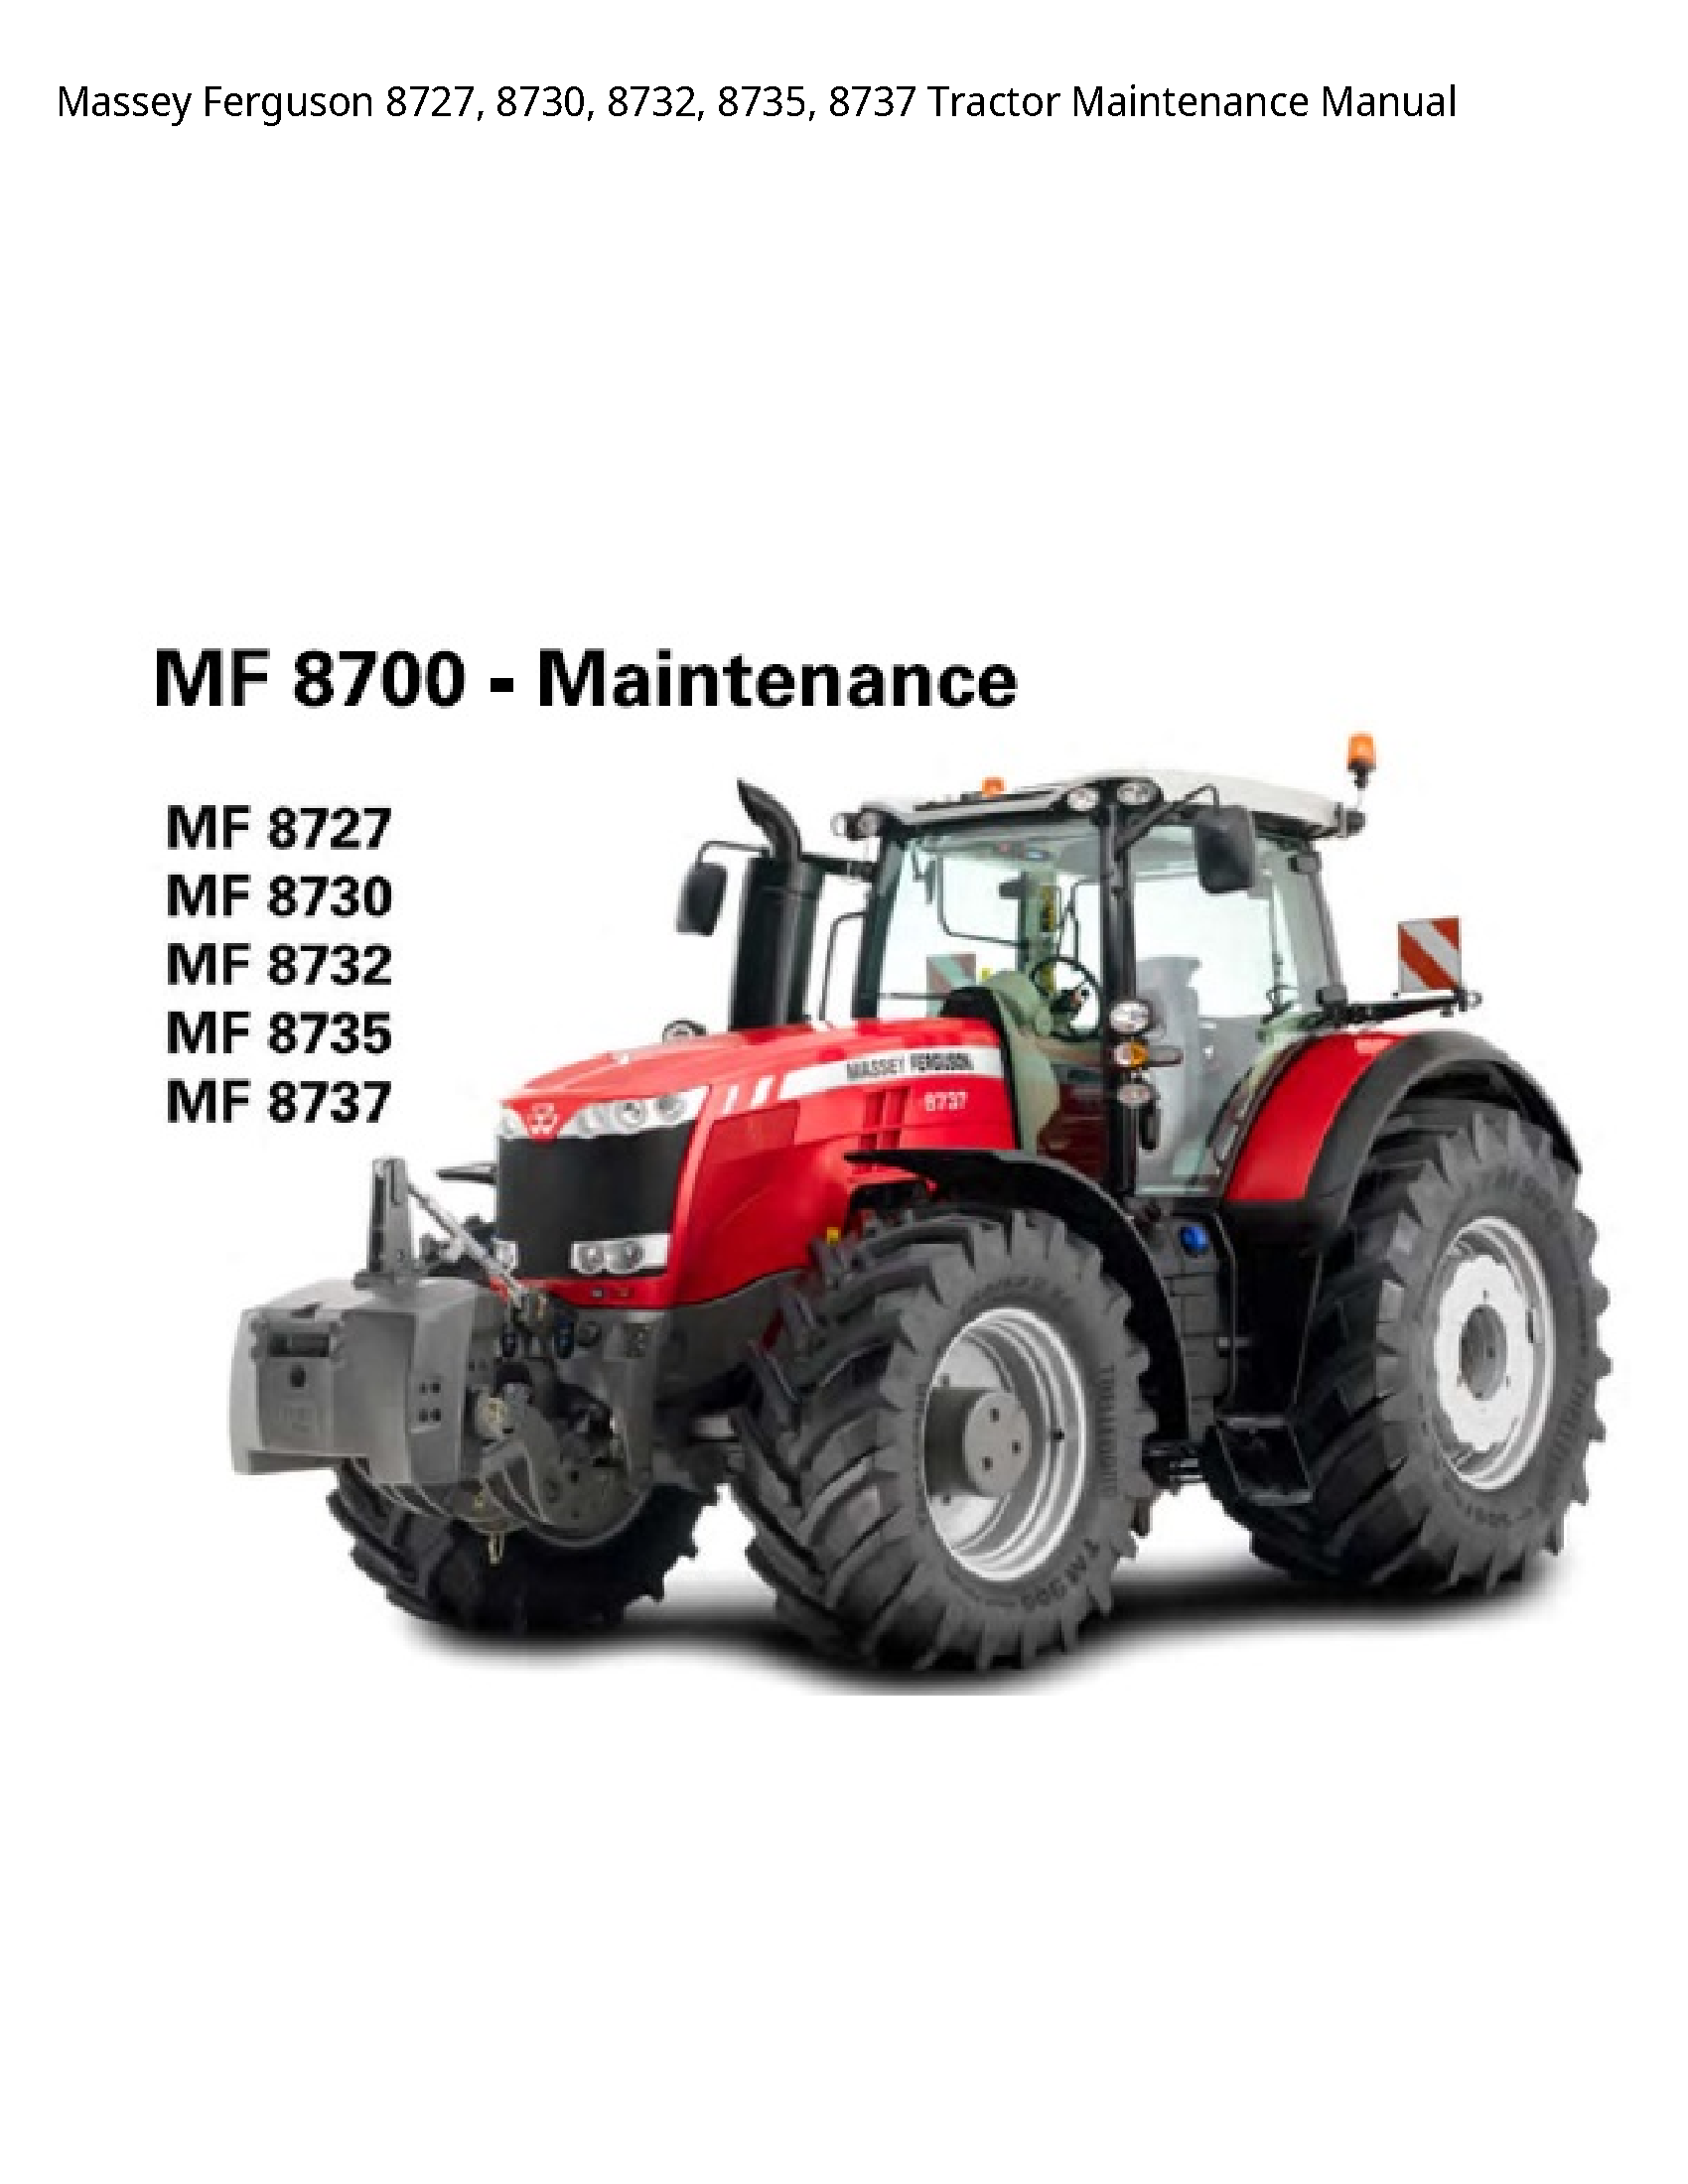 Massey Ferguson 8727 Tractor Maintenance manual